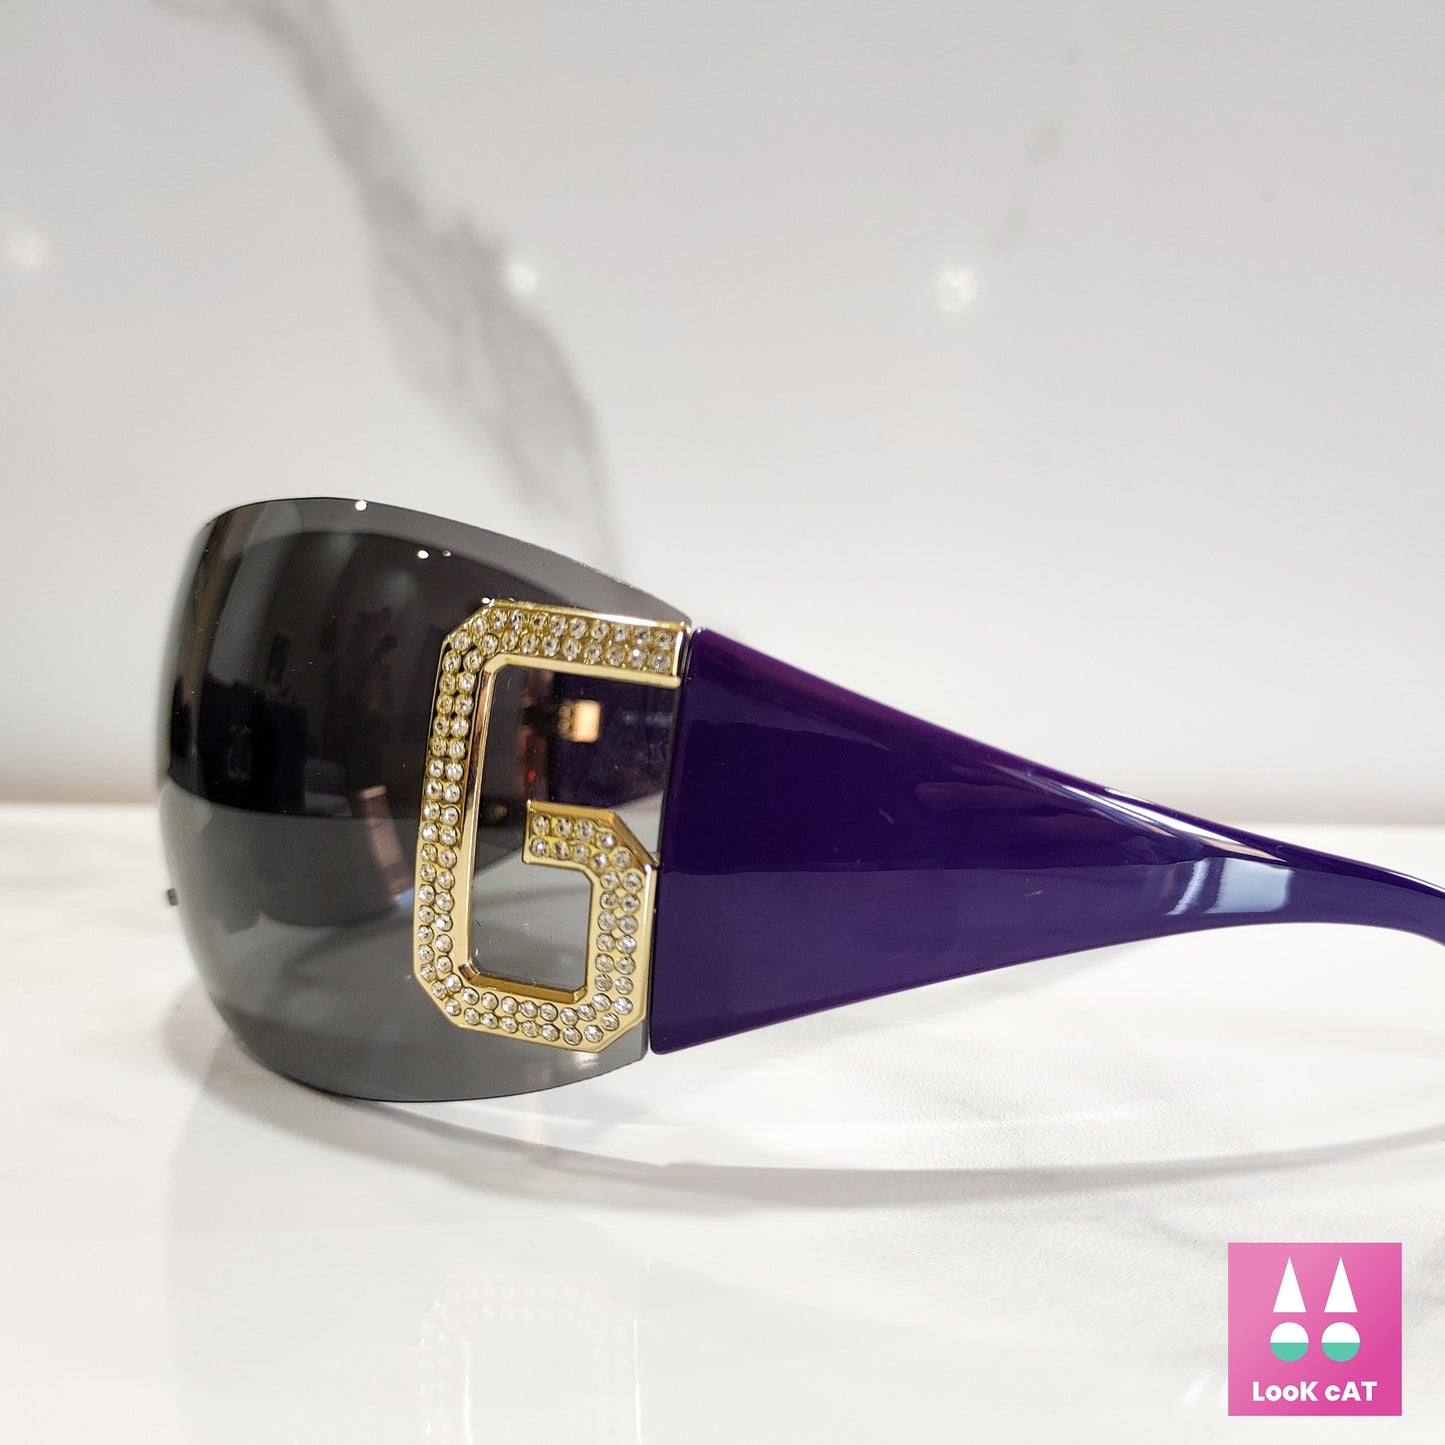 Dolce e Gabbana 893S Y2K wrap shield occhiali da sole vintage occhiali gafas 90s